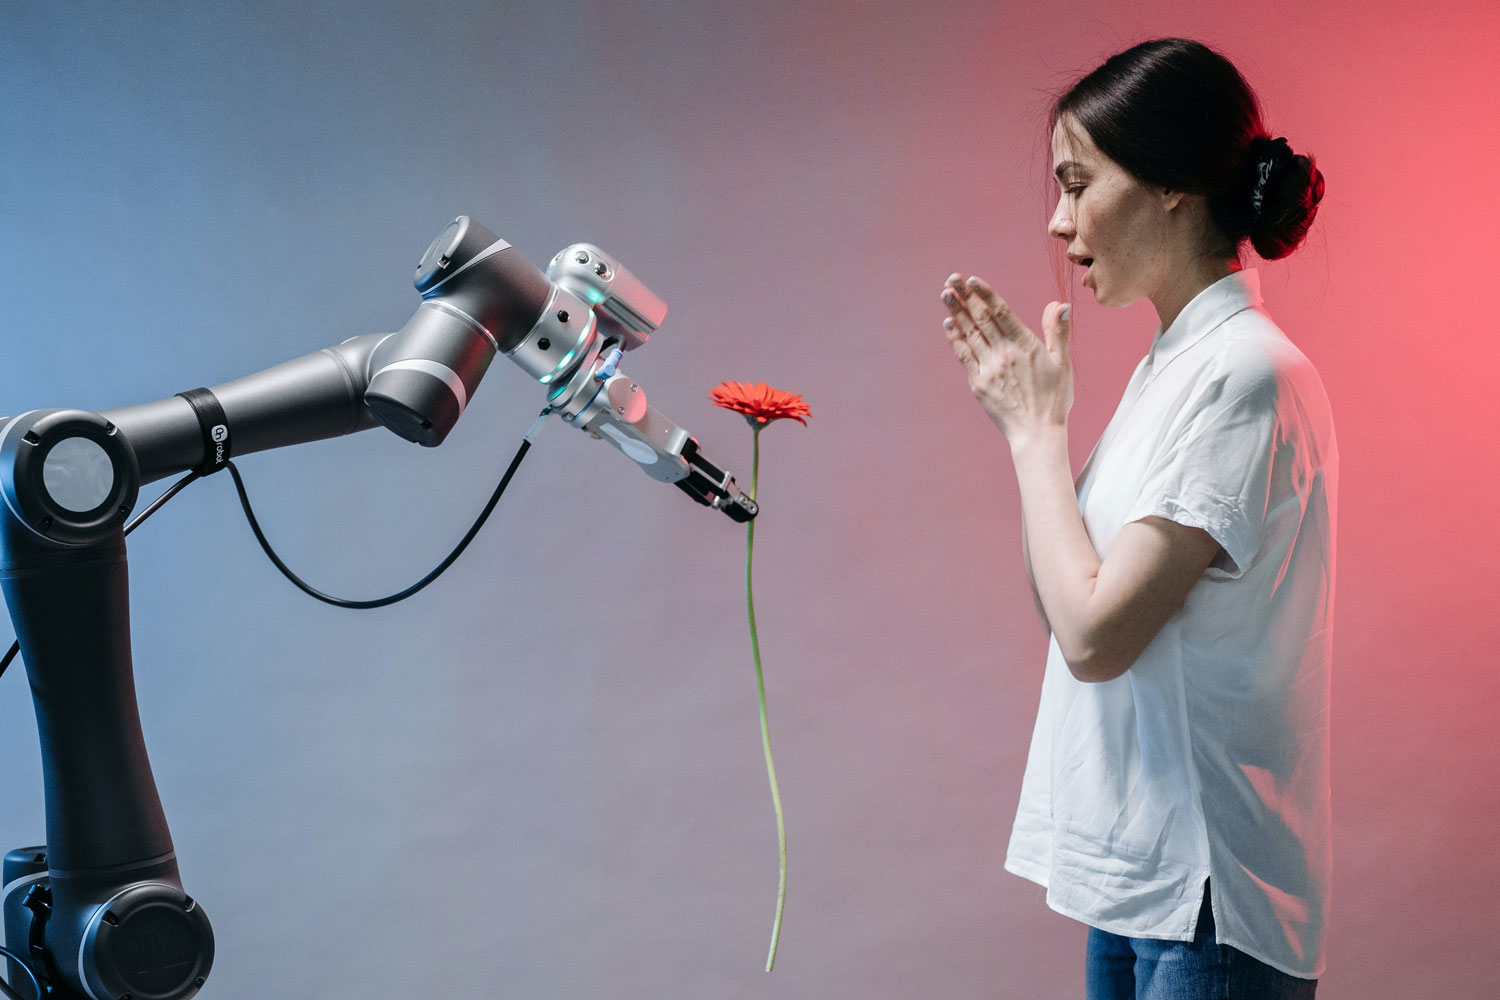 robot arm holding flower towards woman